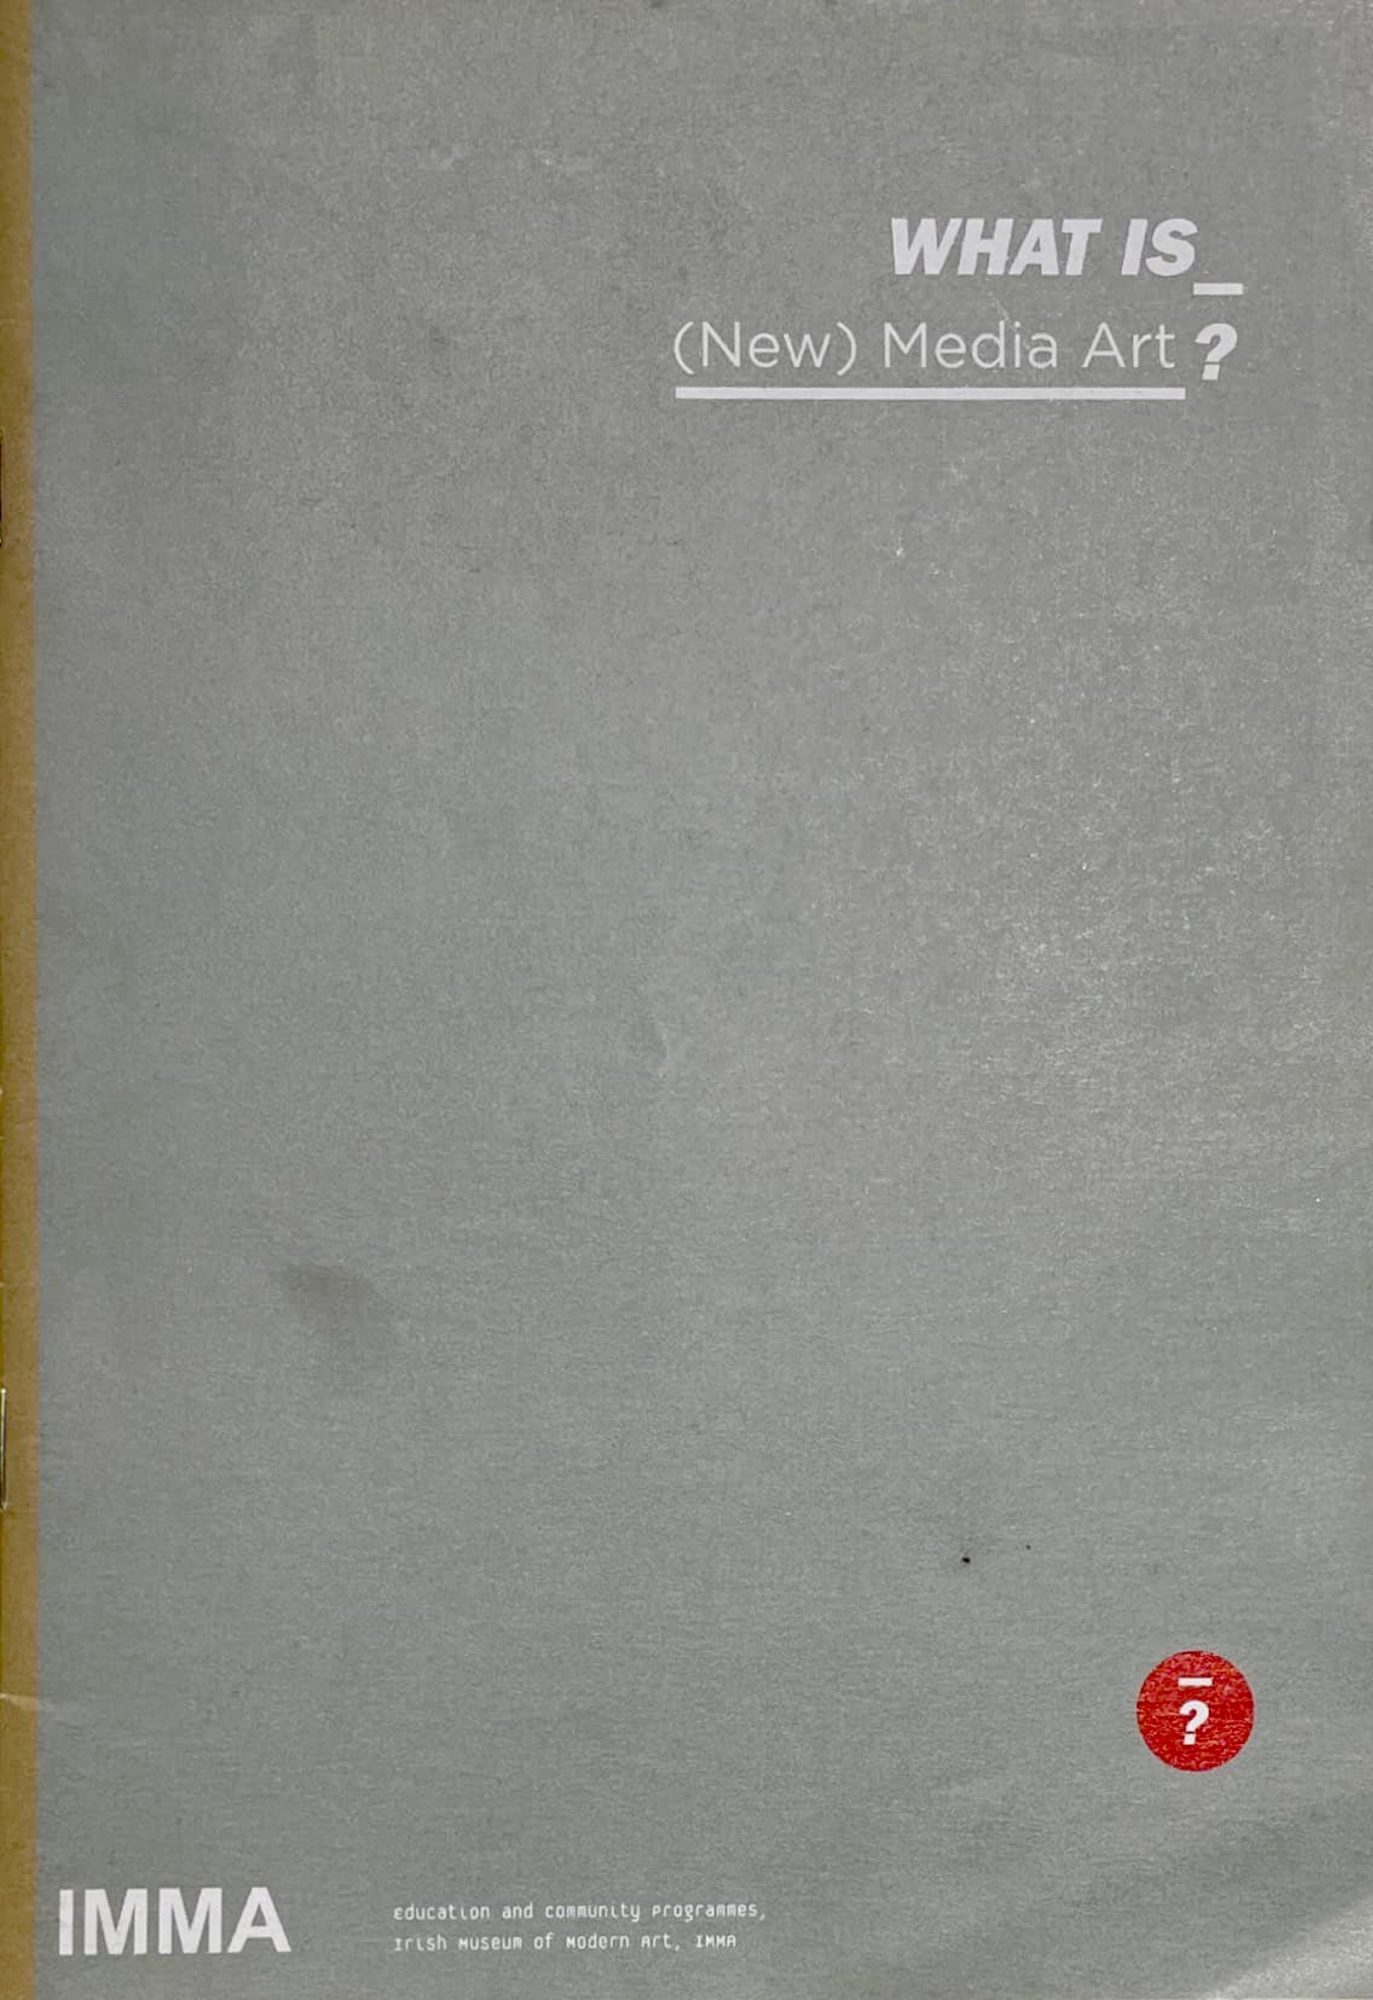 Art and New Media